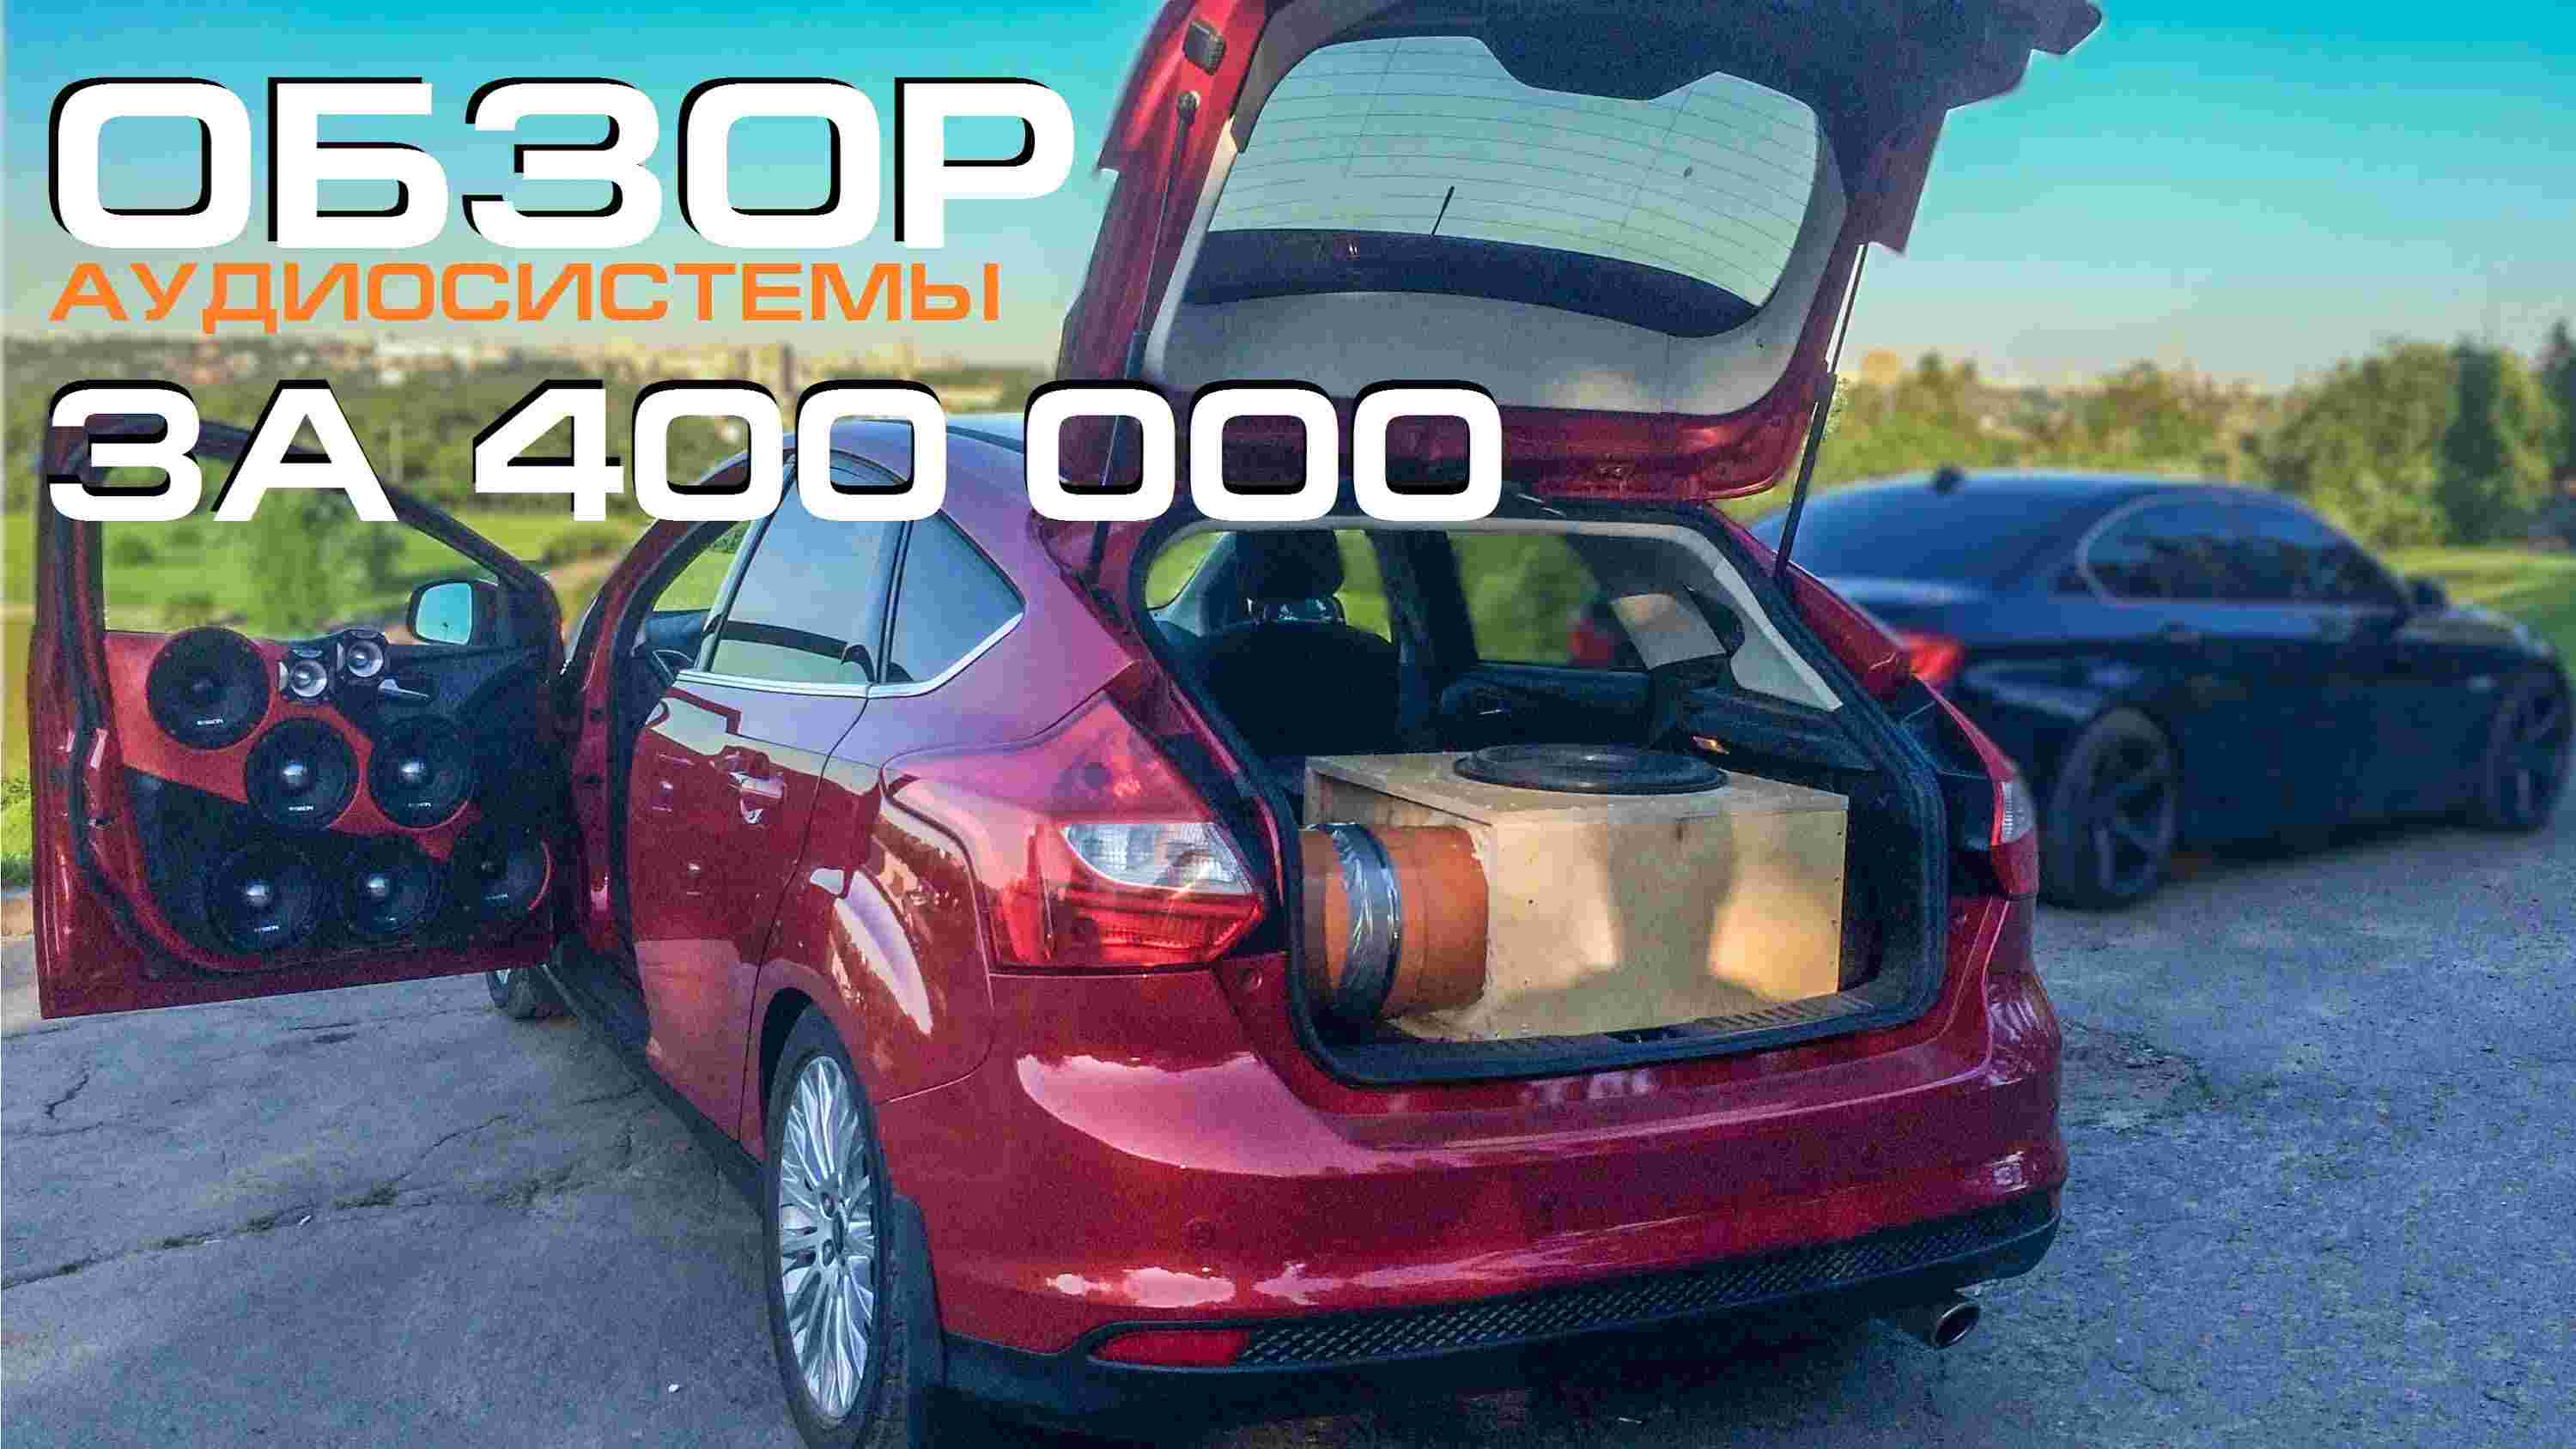 (Review of 7K dollars installation) Аудиосистема за 400 тысяч в Ford Focus 3